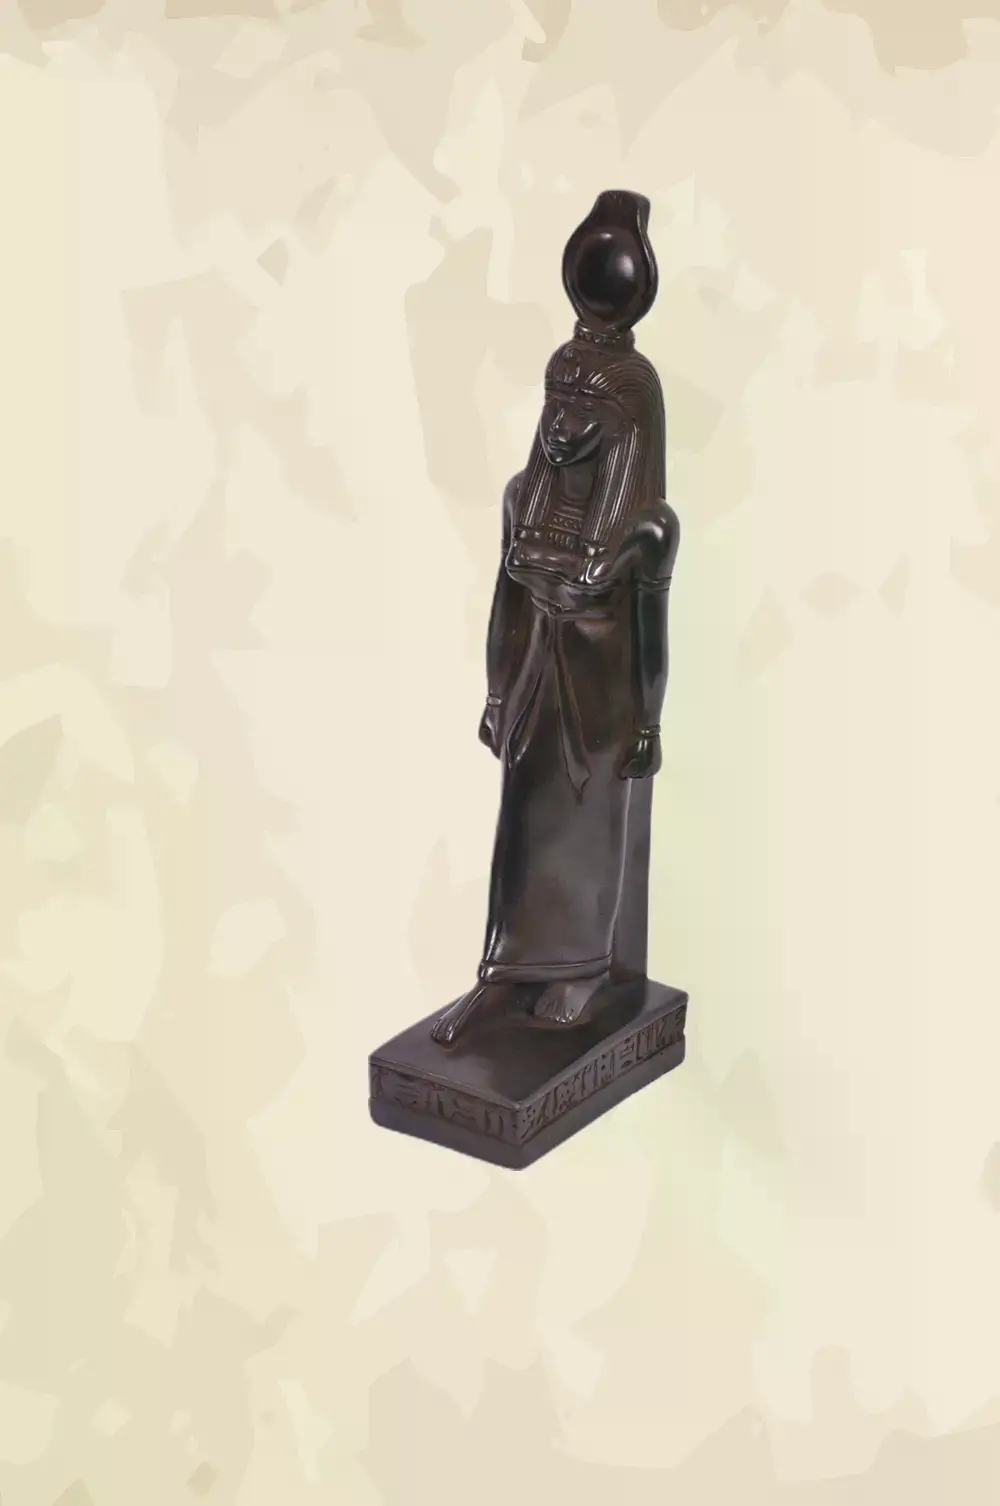 Egyptian goddess hathor statue made of basalt stone